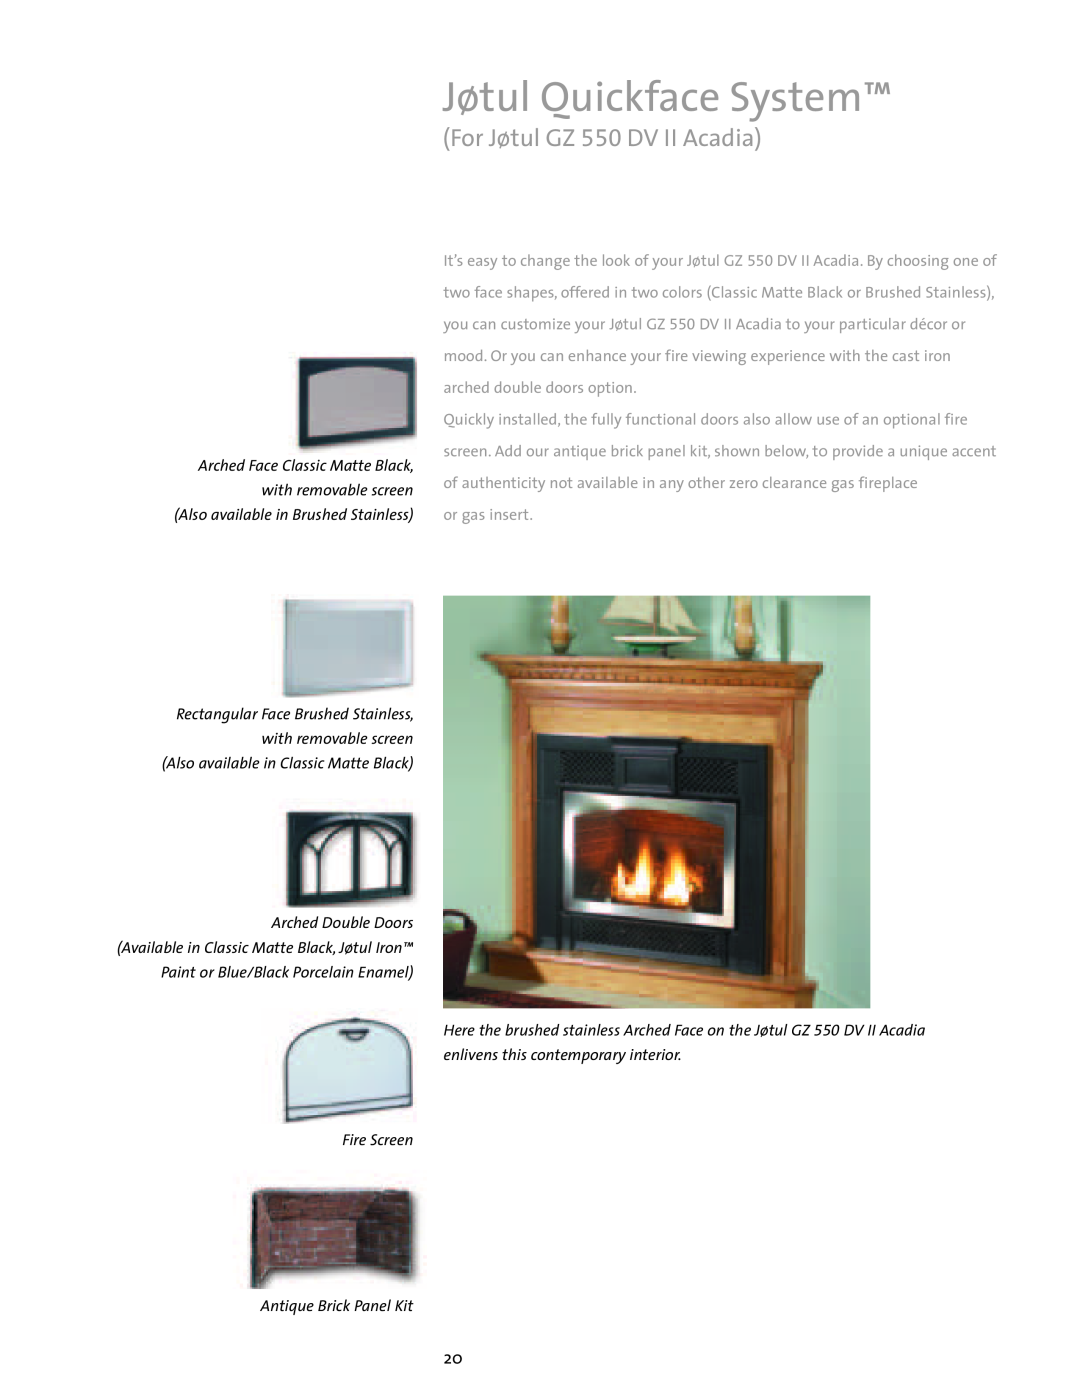 Jotul Gas Inserts and Fireplaces brochure Jøtul Quickface System, For Jøtul GZ 550 DV II Acadia 